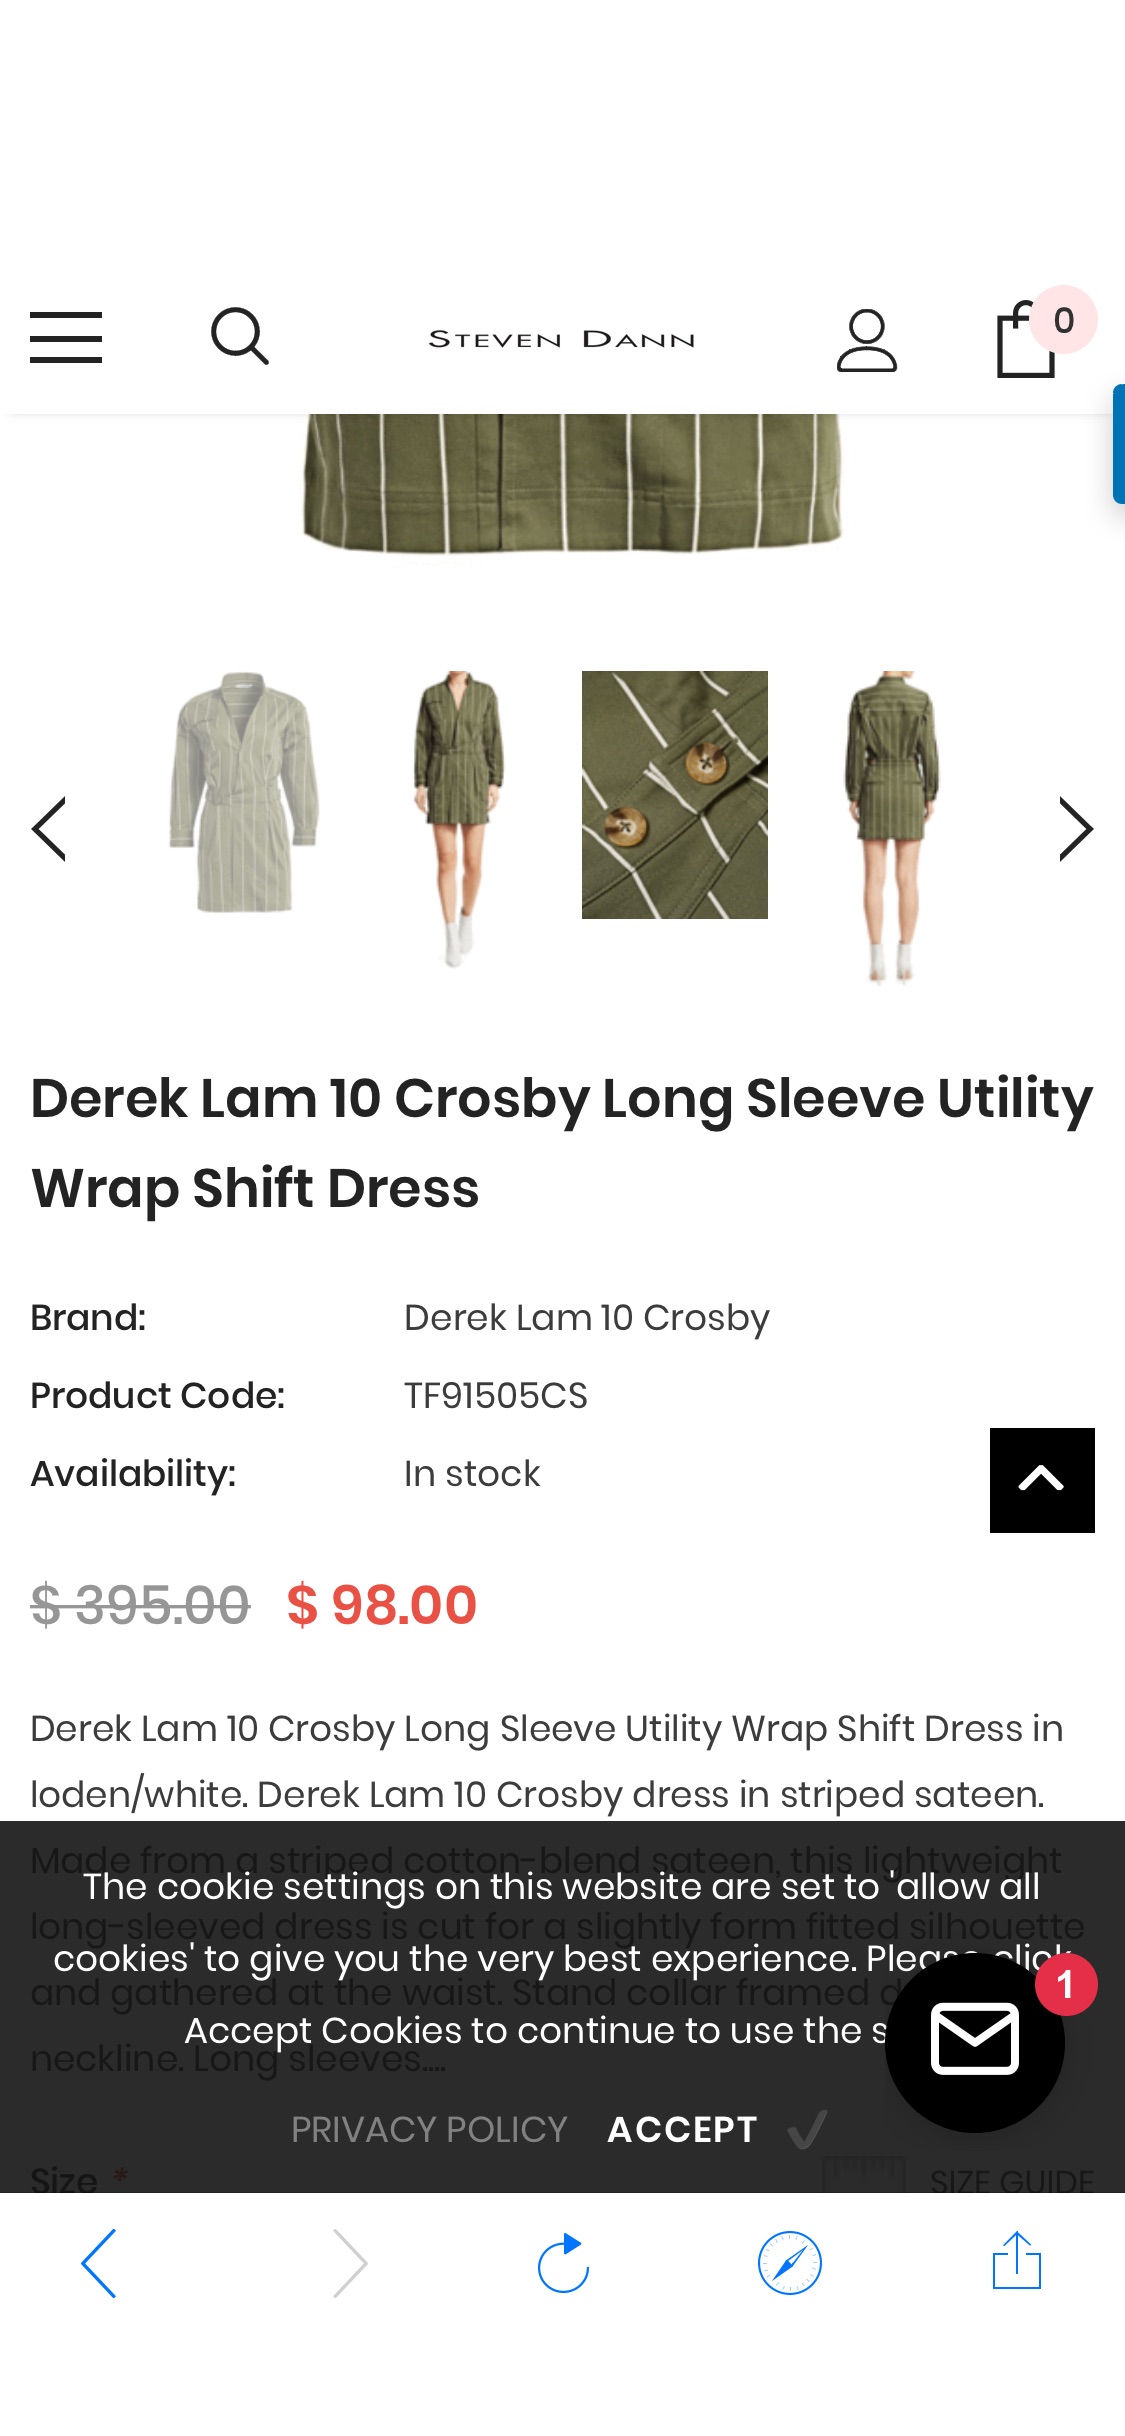 Steven Dann/Derek Lam 10 Crosby 衬衫裙